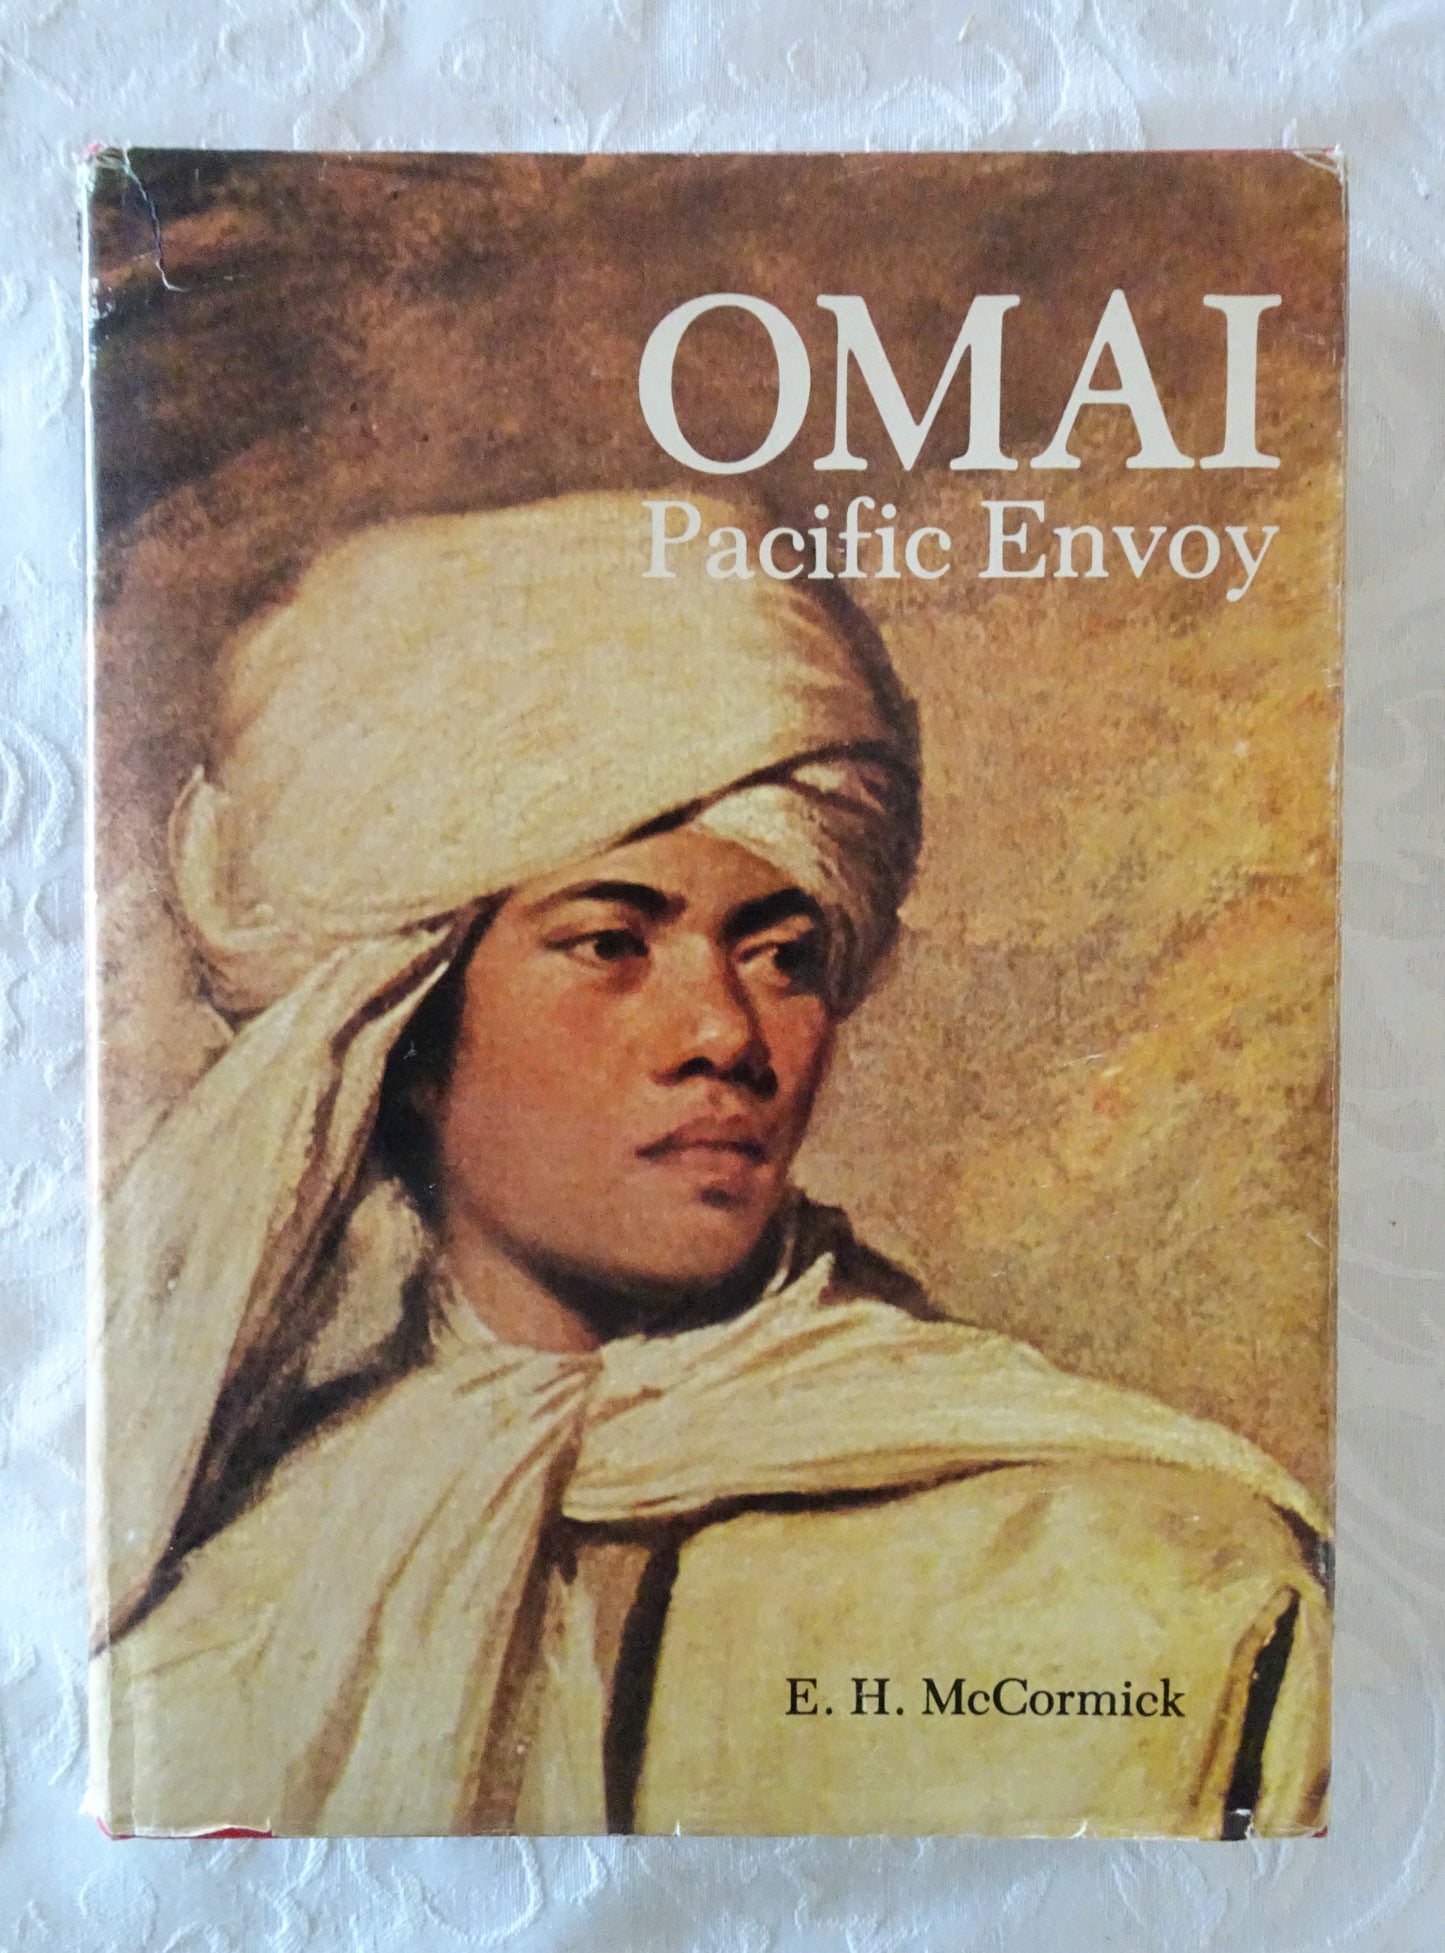 Omai, Pacific Envoy by E. H. McCormick